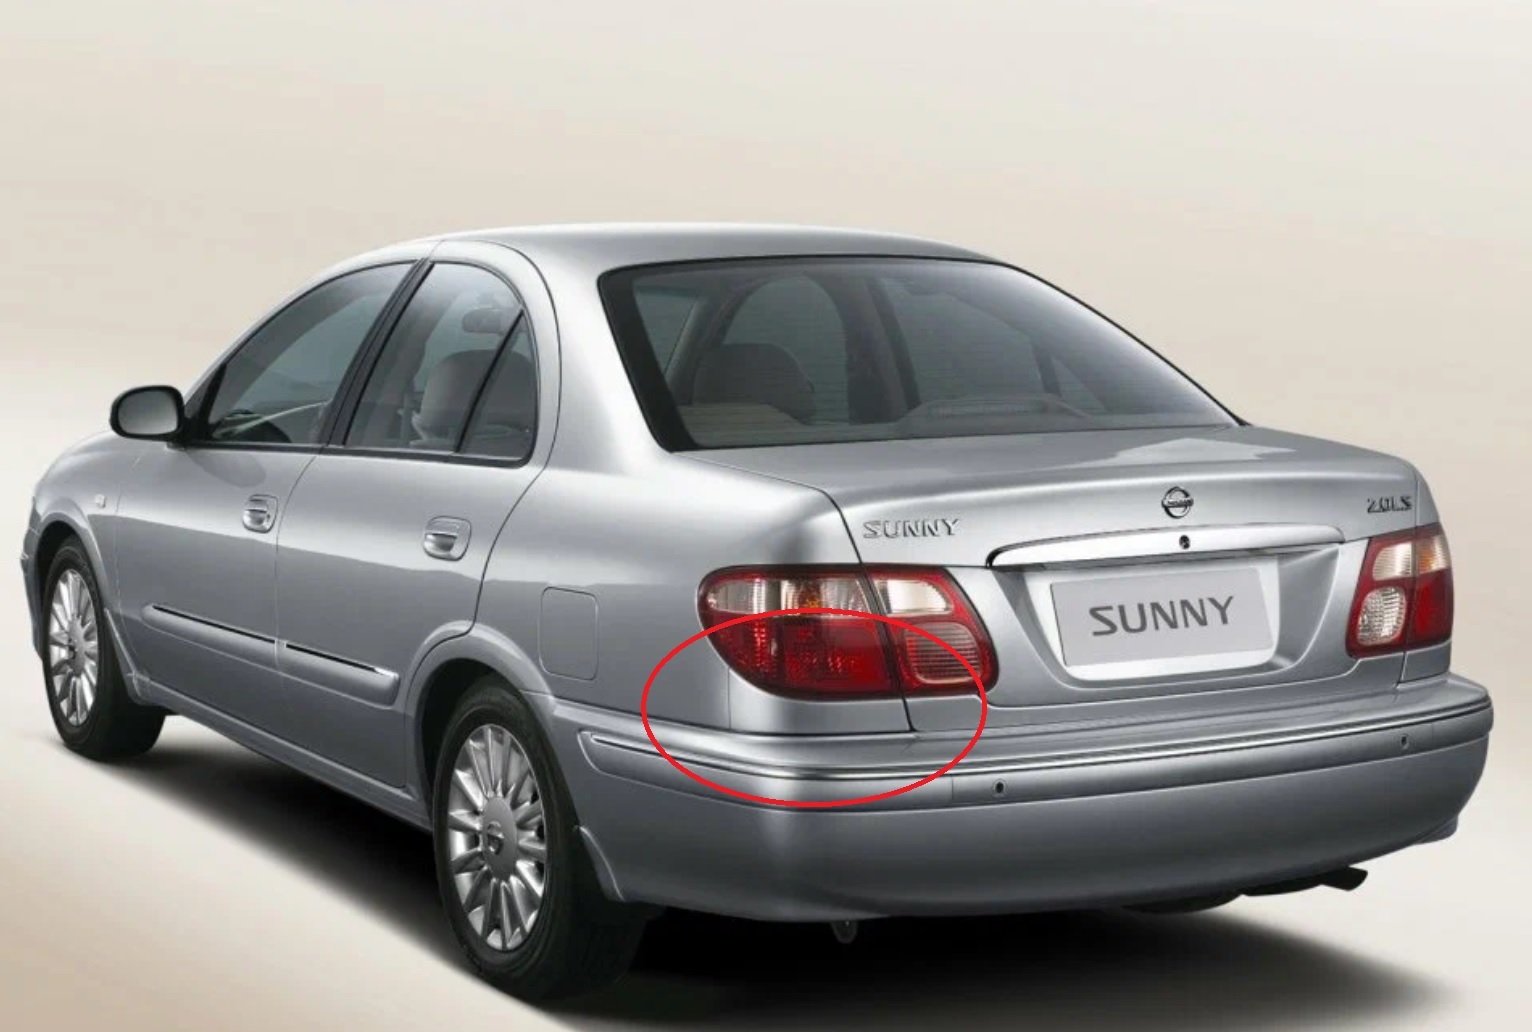 Ниссан Санни n16. Nissan Sunny 2000. Nissan Sunny 1998. Nissan Sunny 2009. Купить кузов ниссан санни